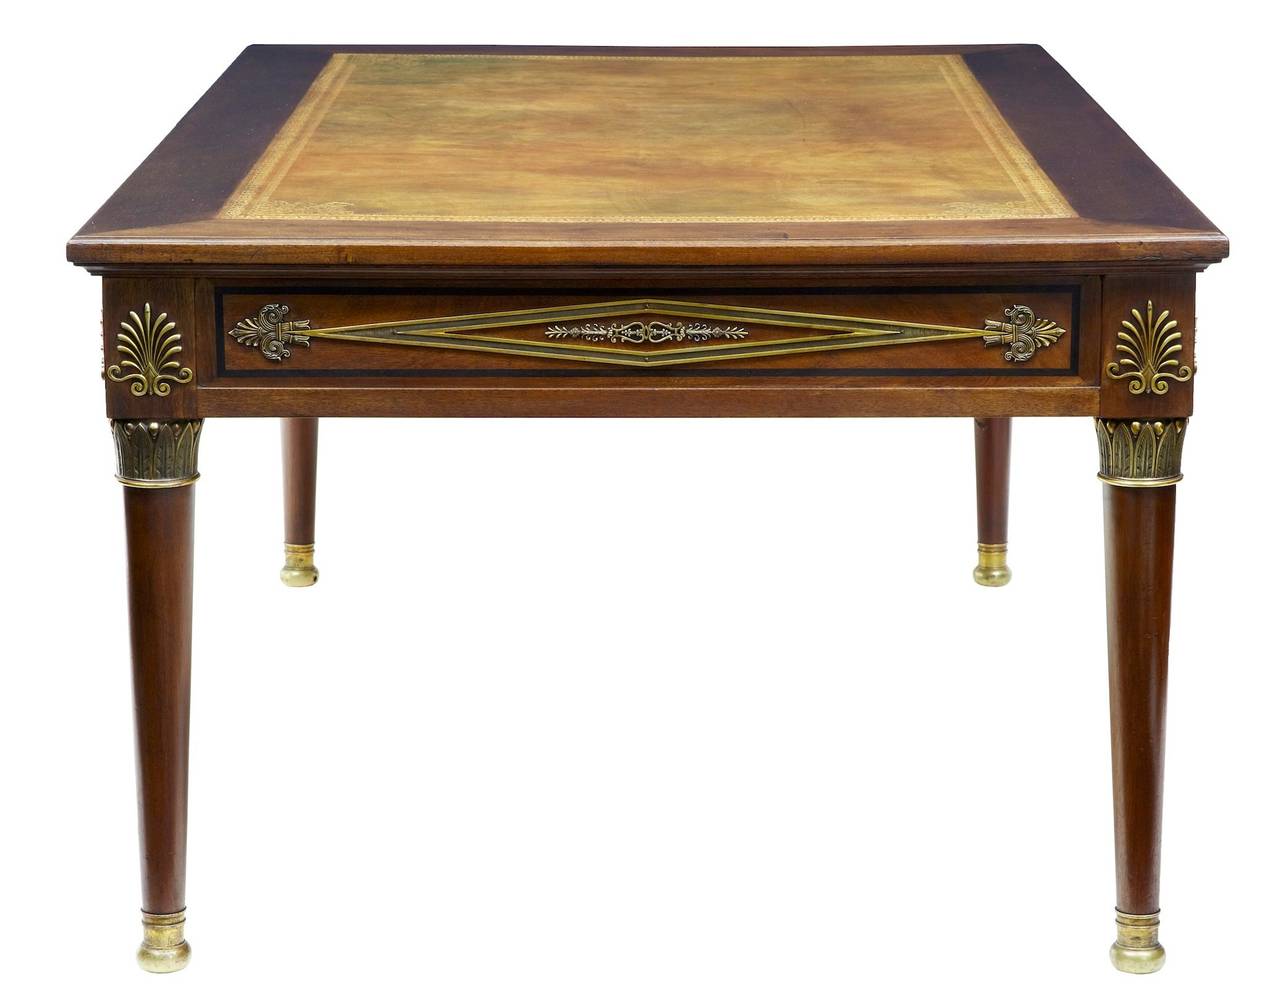 Empire Revival 19th Century French Mahogany Ormolu Empire Influenced Desk